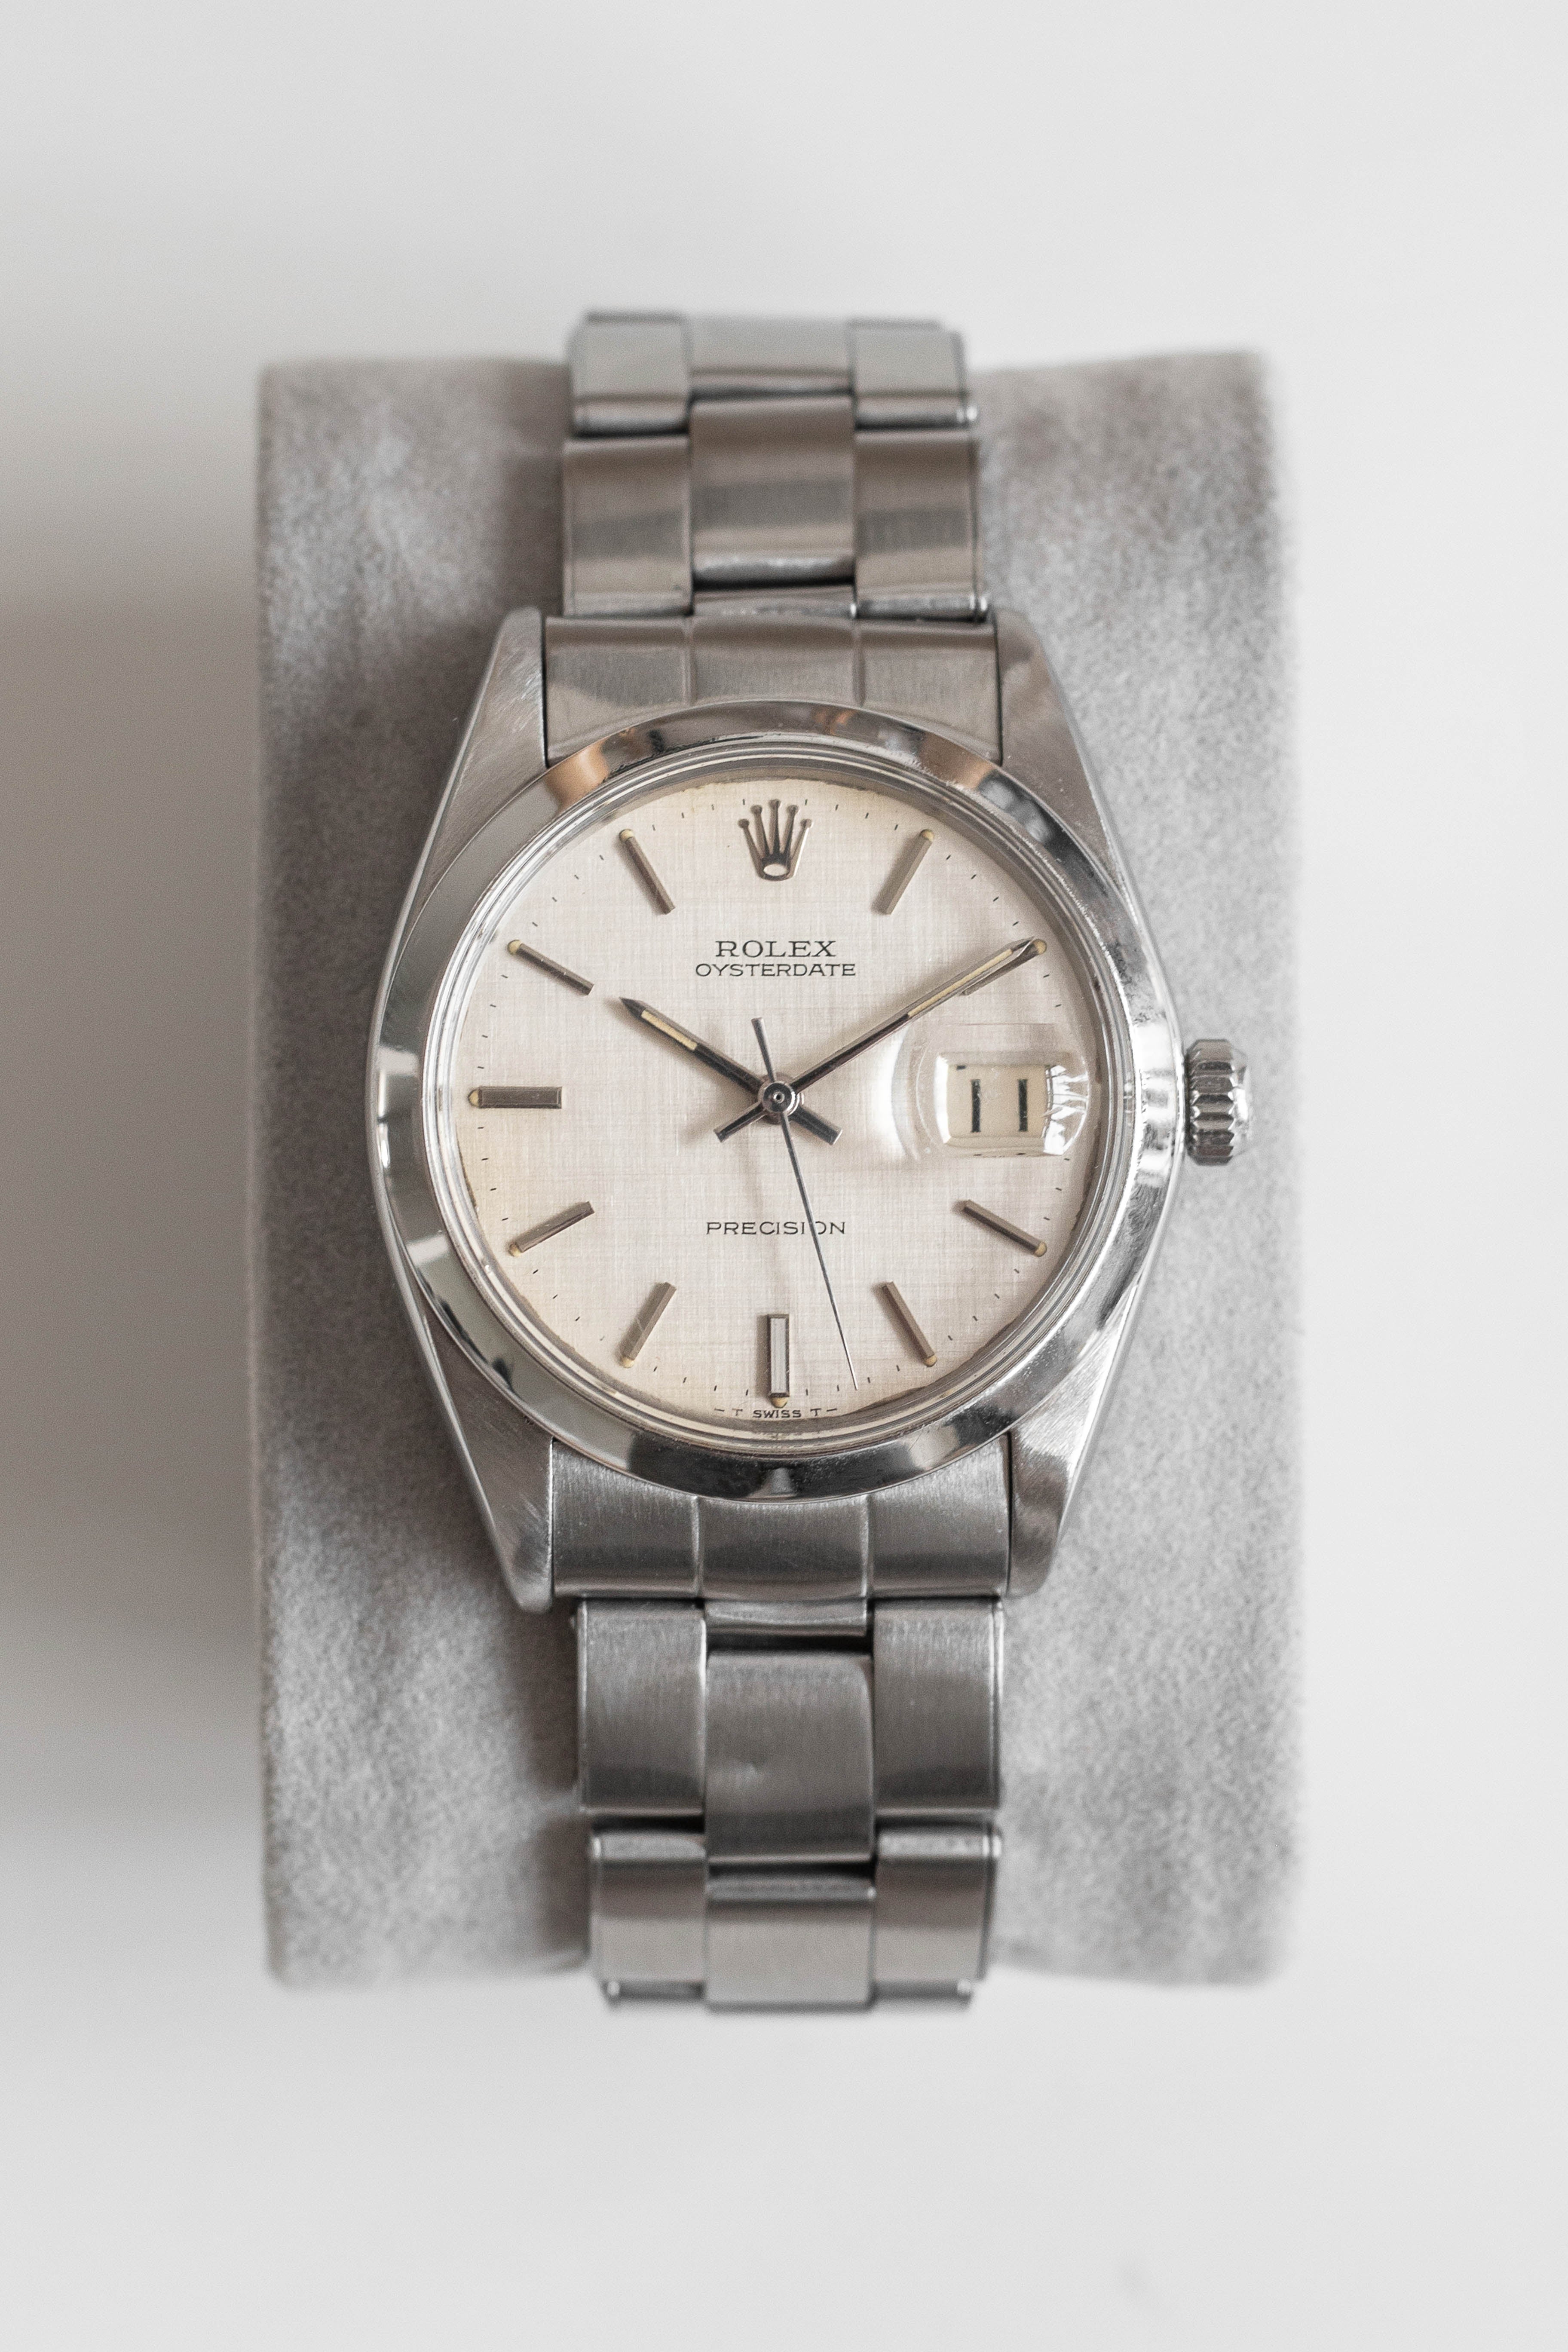 Rolex Oysterdate Precision 6694 Linen Dial 1968 | Vintage Luxury Watches – Wynn & Thayne